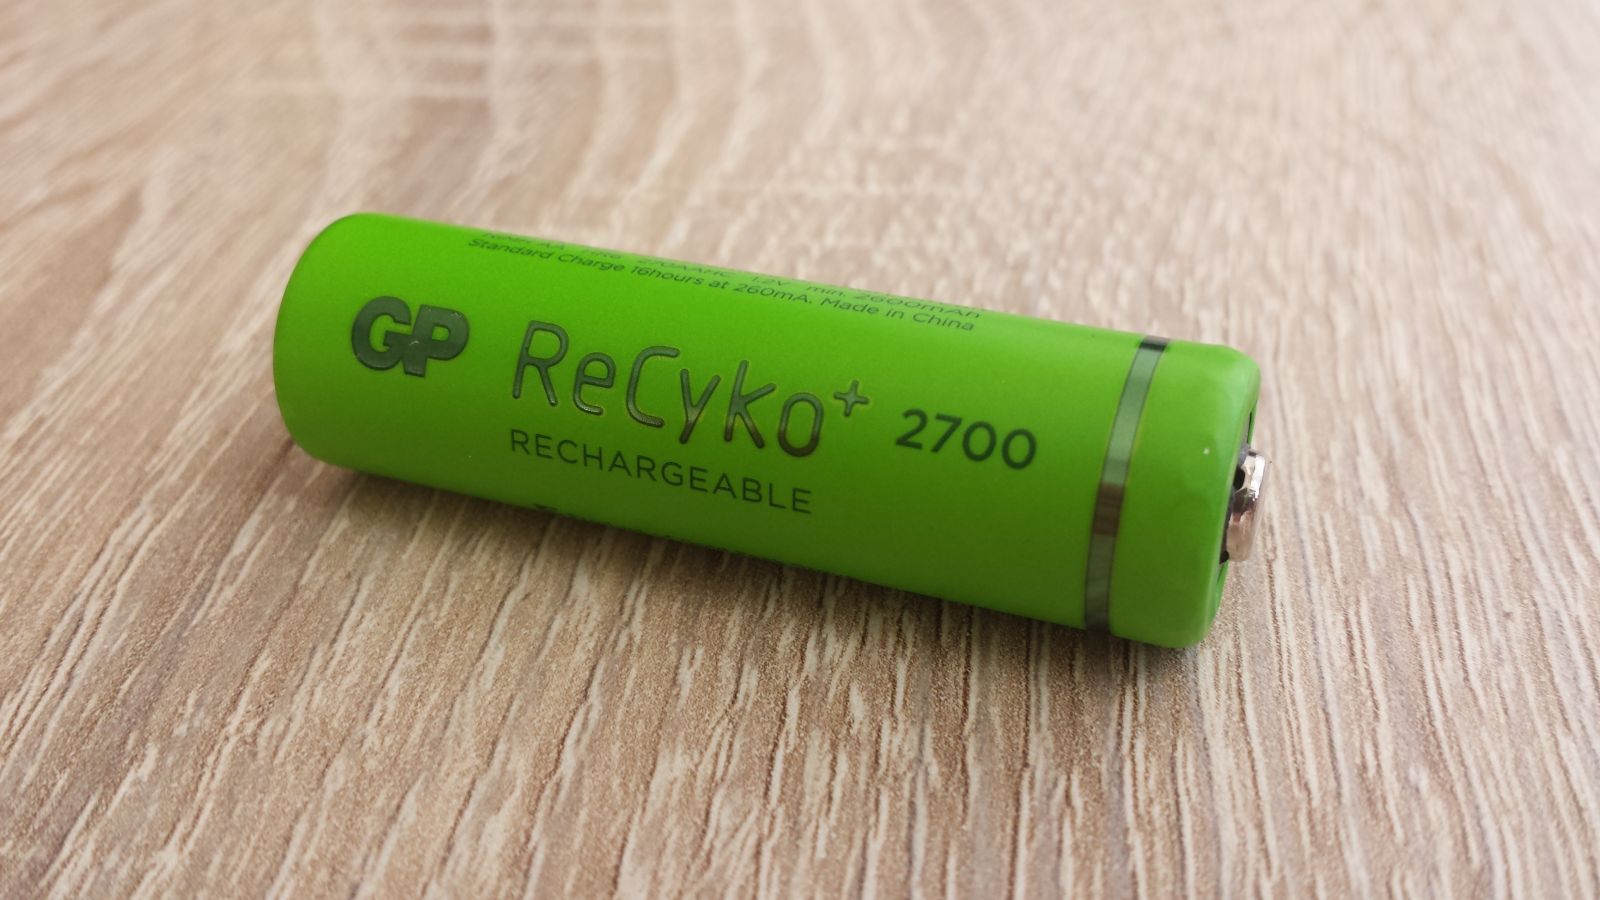 GP ReCyko+ 2700